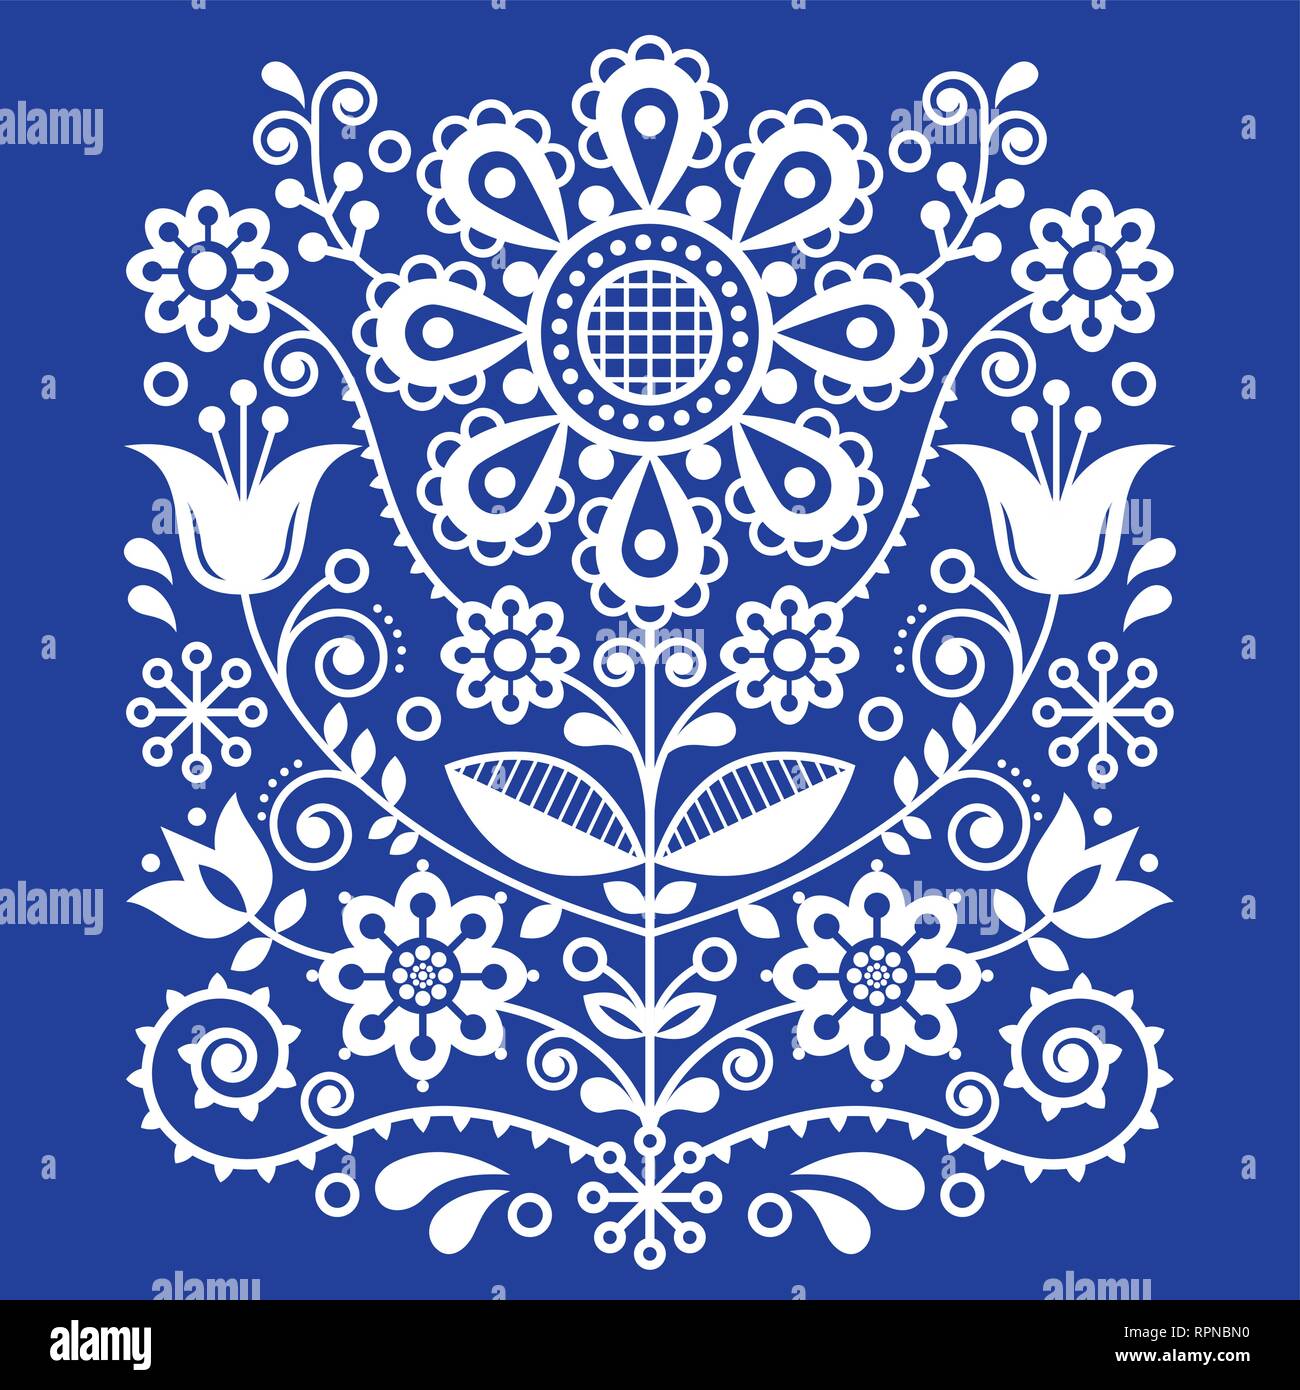 Skandinavische vektor Volkskunst Muster, florale Retro ornament Design, nordischen Stil ethnische Dekoration Stock Vektor